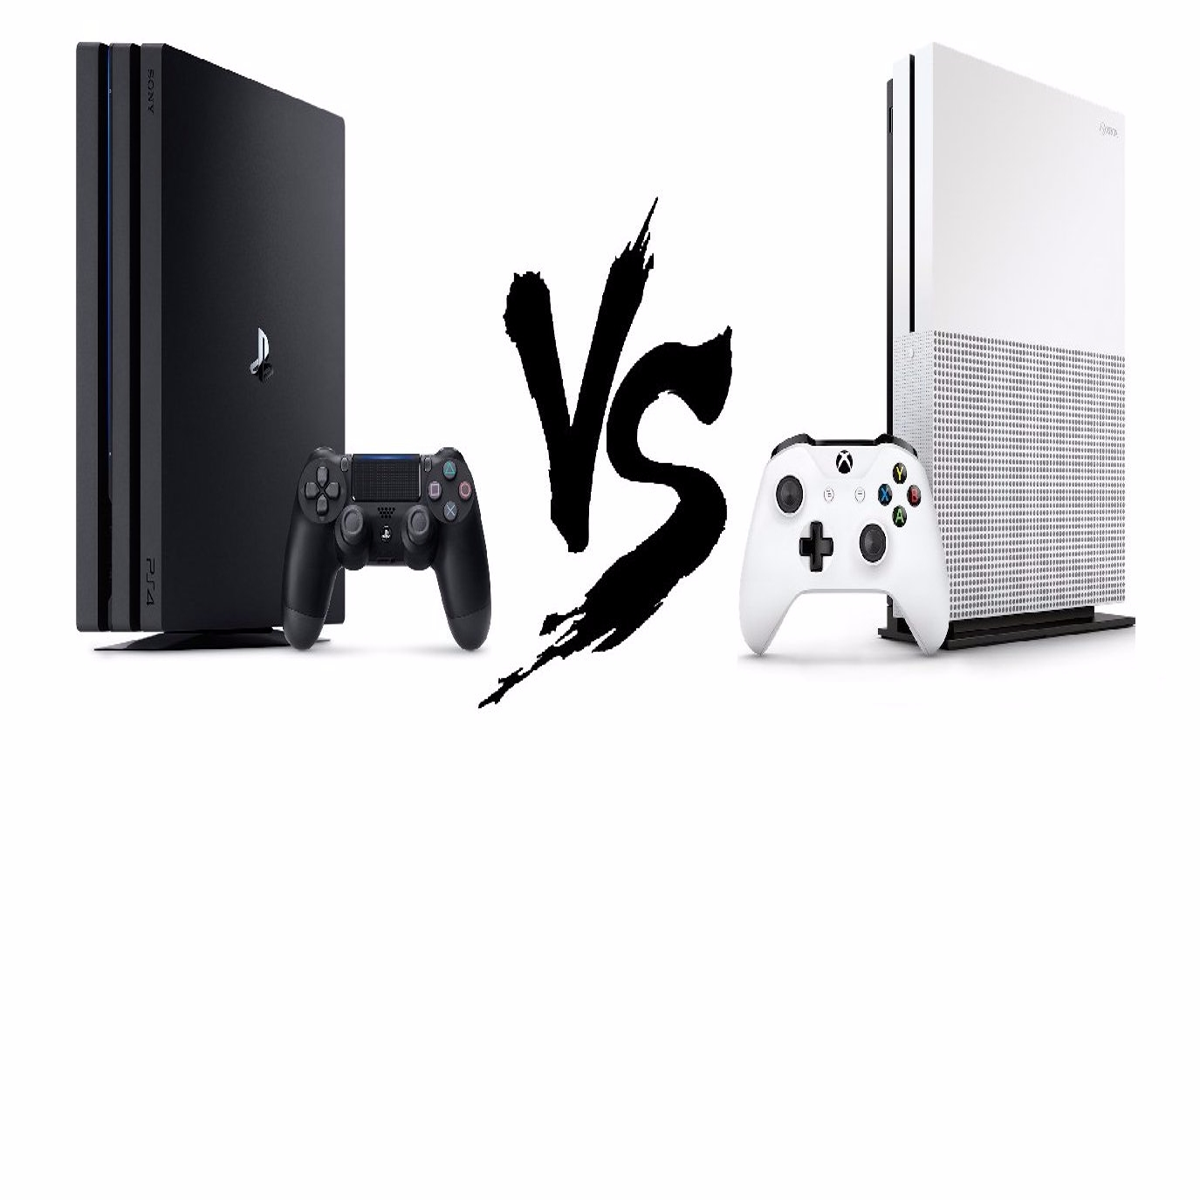 GTA 6 será lançado para Xbox One ou PlayStation 4?